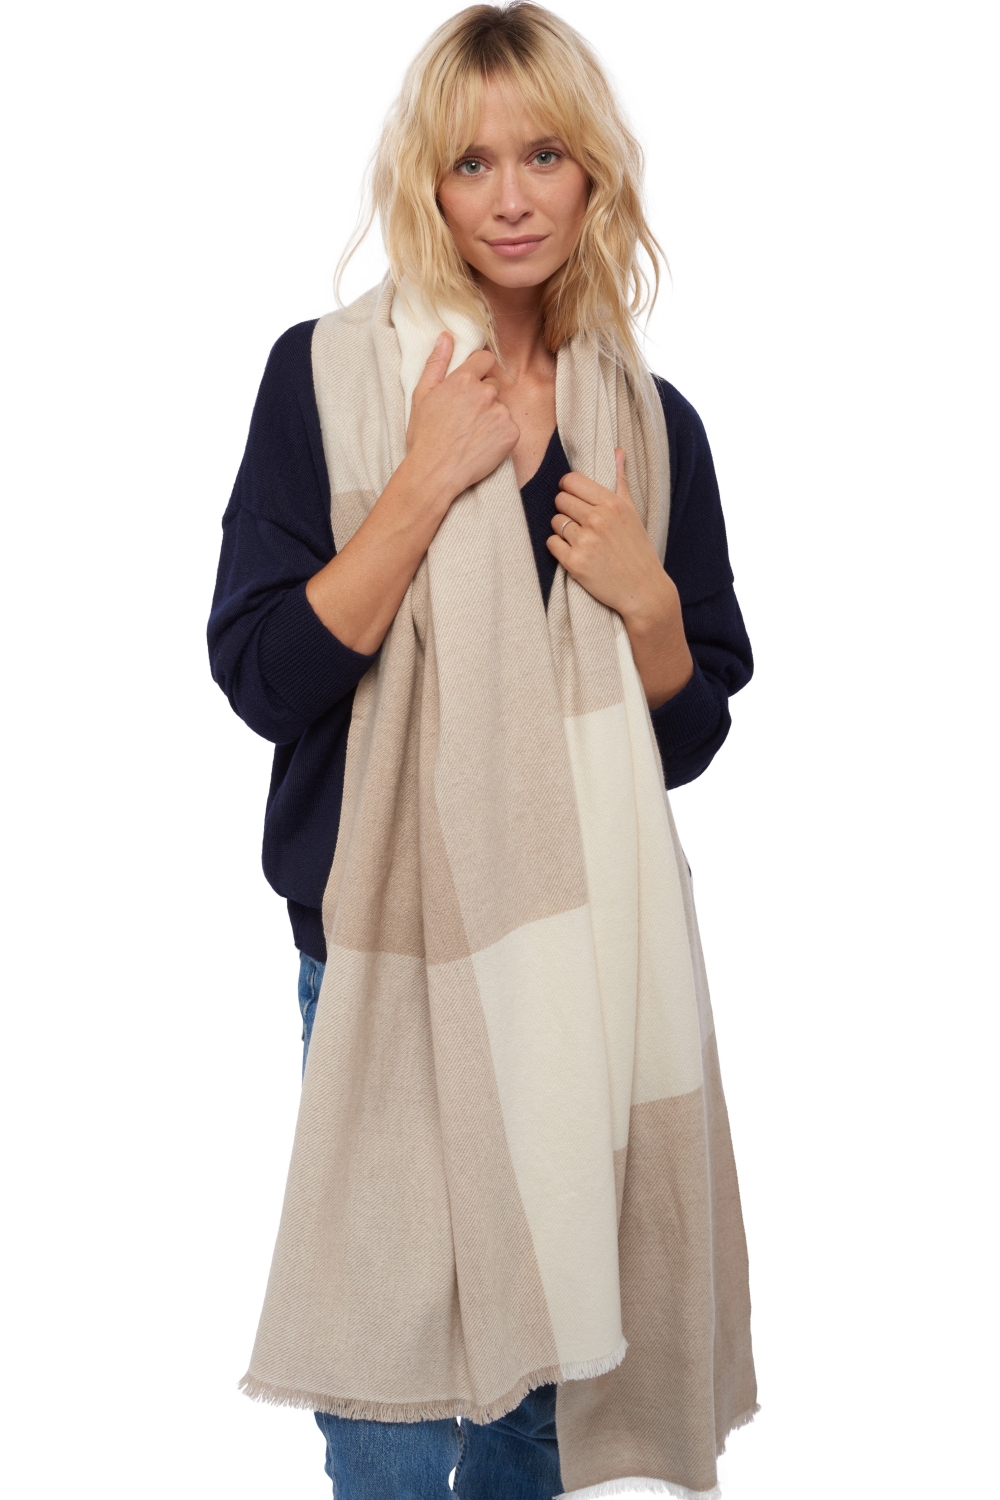 Cashmere ladies shawls verona natural ecru natural stone 225 x 75 cm